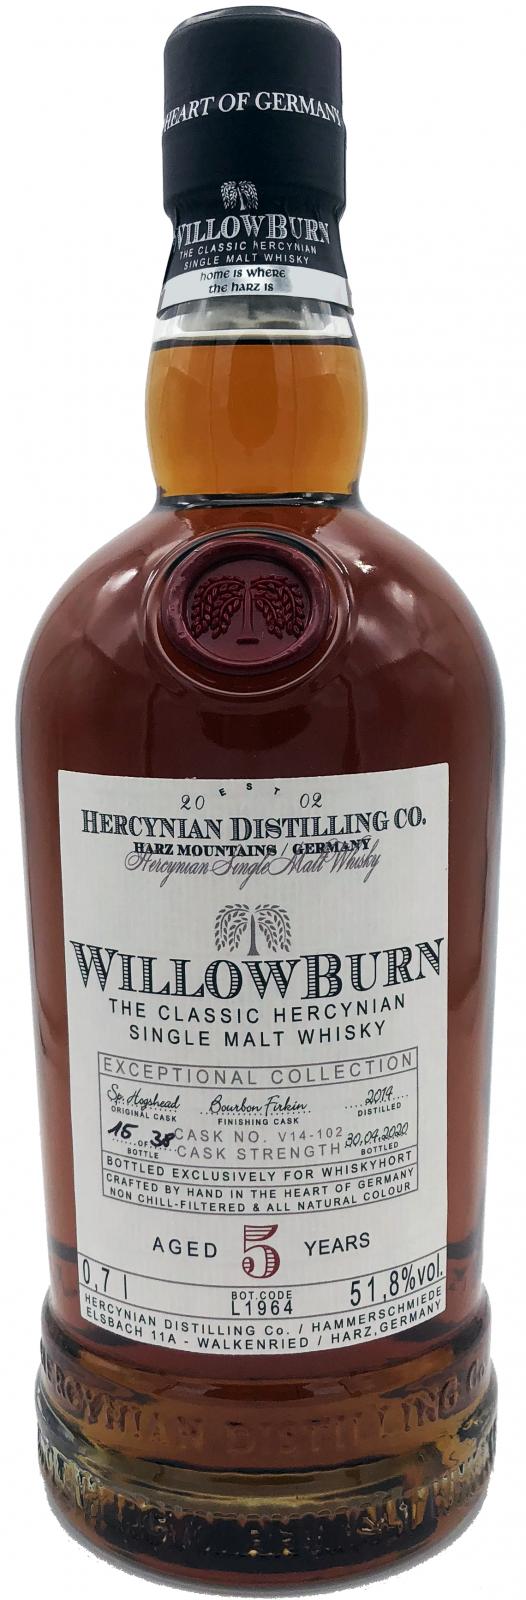 WillowBurn 2014 Exceptional Collection Bourbon Firkin Hogshead V14-102 Whiskyhort 51.8% 700ml